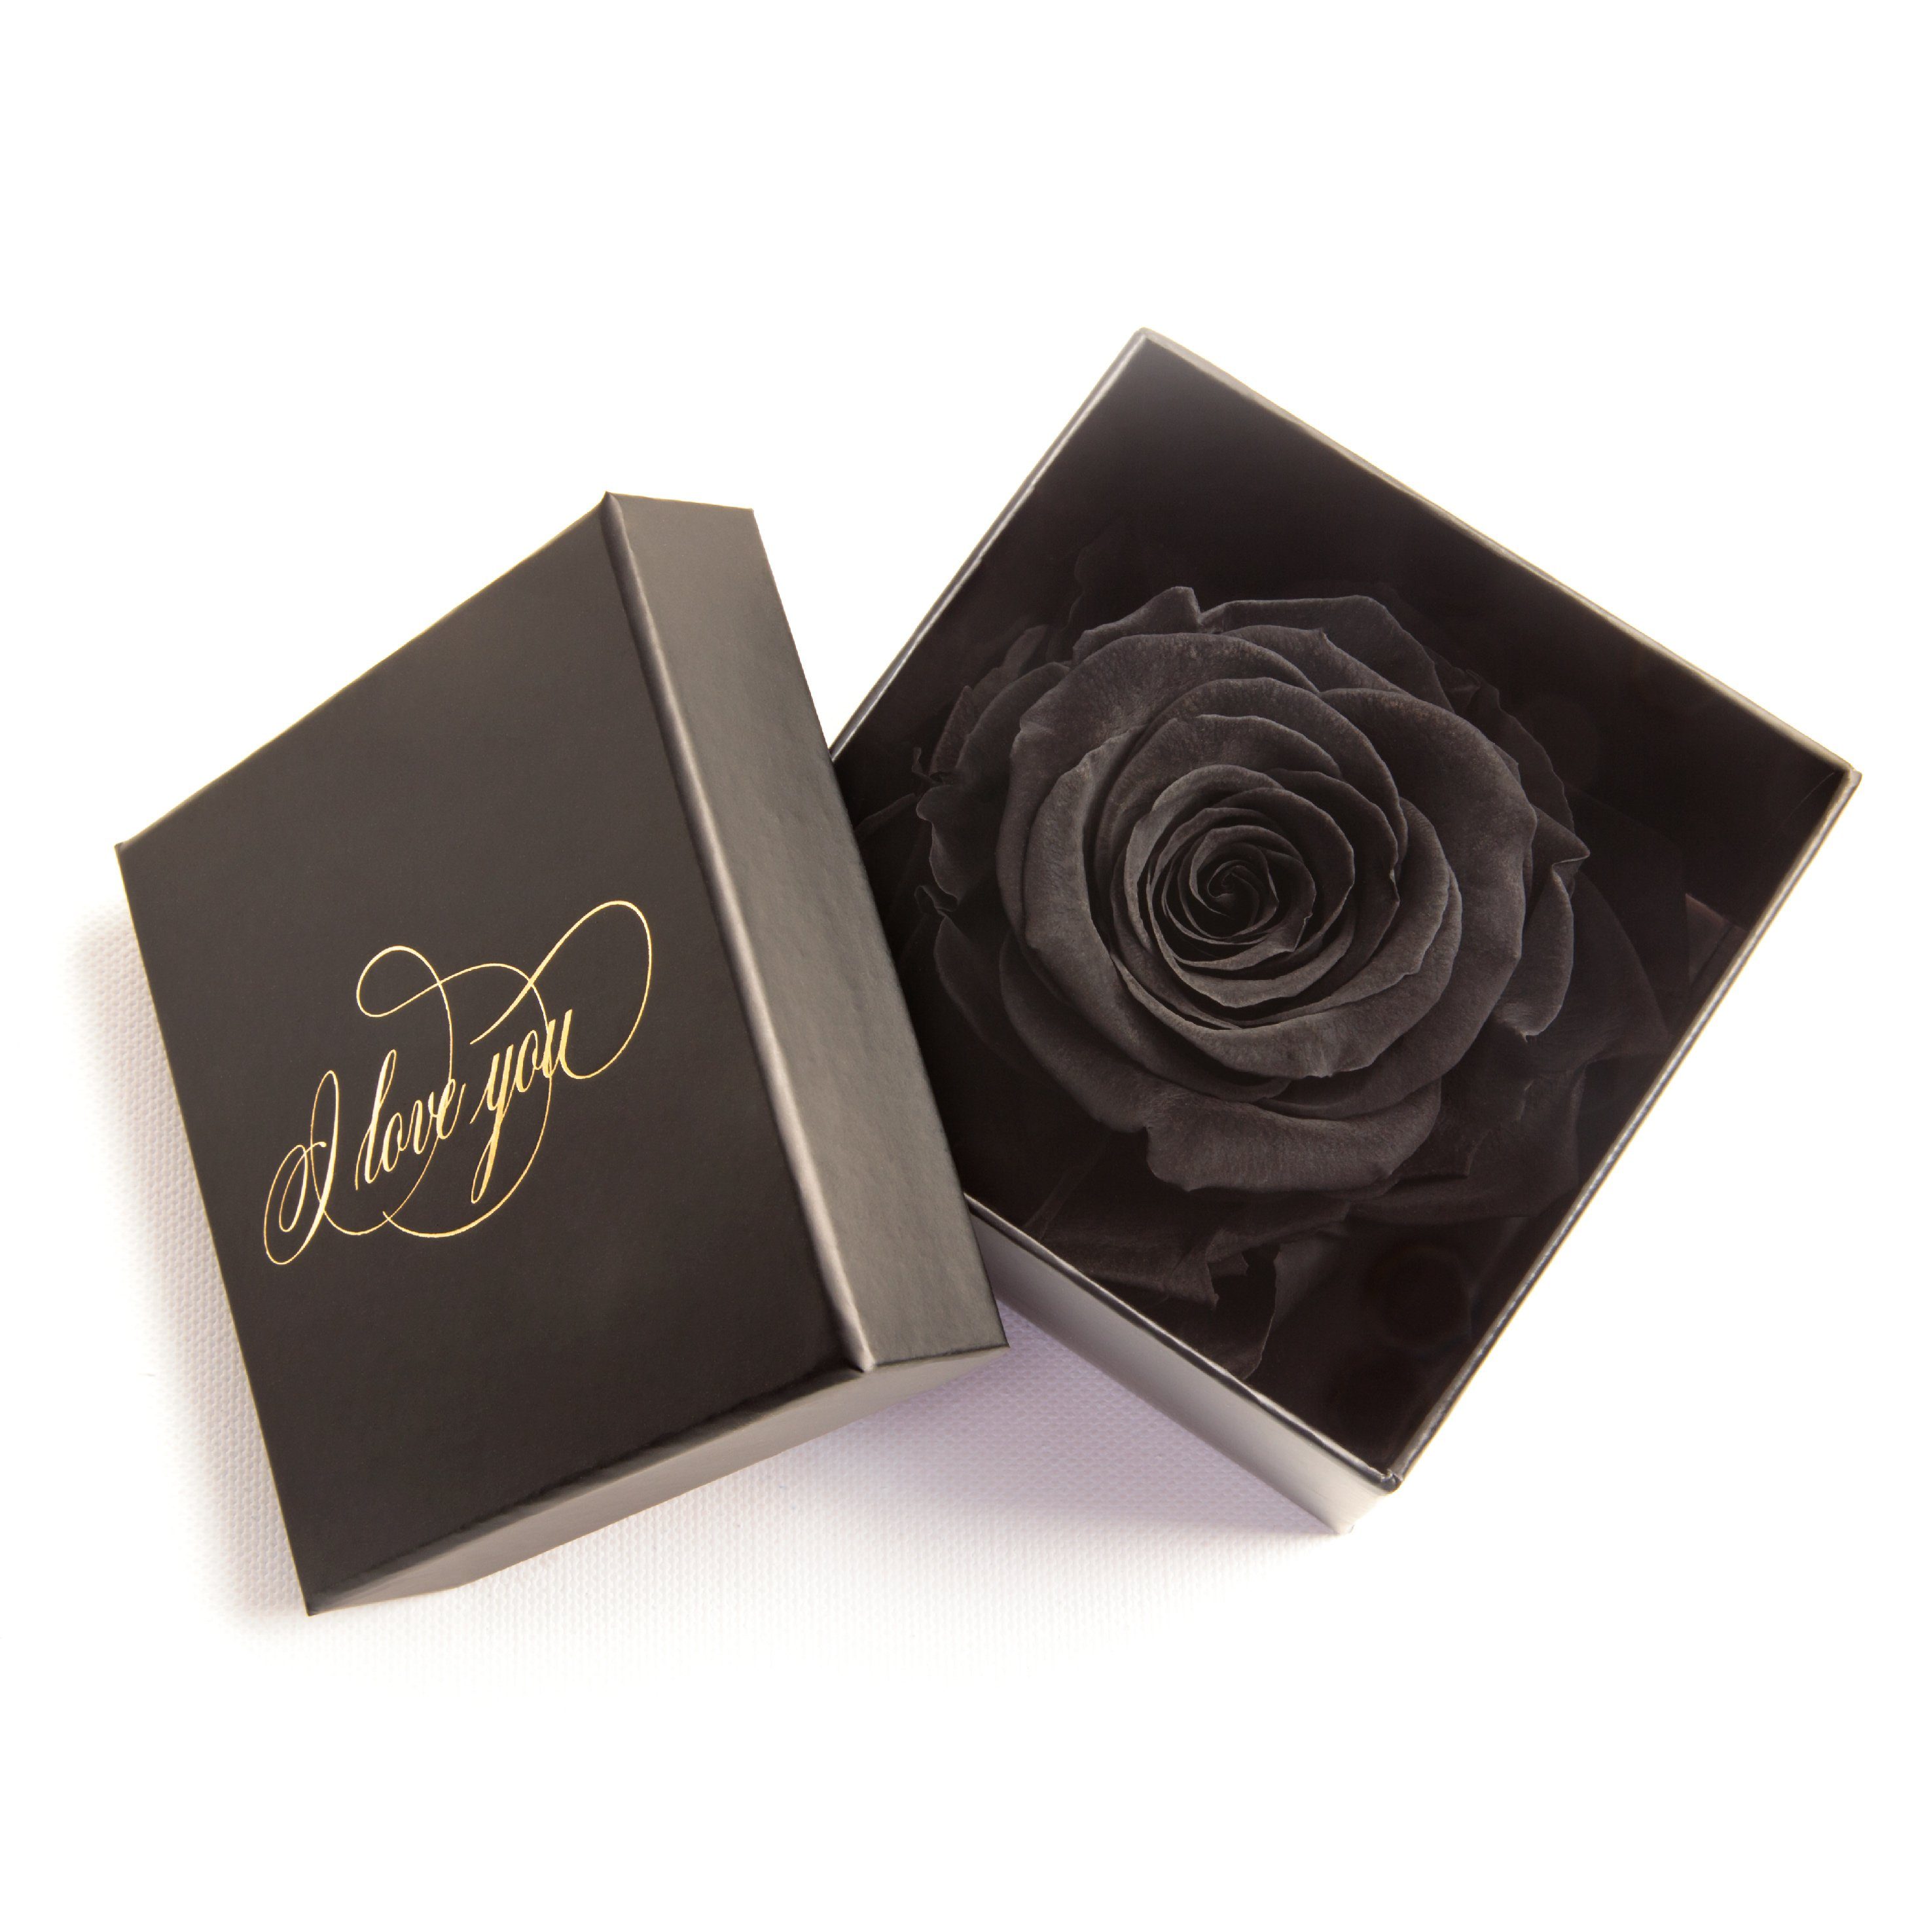 Kunstblume Infinity Rose Box I Love You Geschenk Idee Liebesbeweis Rose, ROSEMARIE SCHULZ Heidelberg, Höhe 6 cm, Echte Rose konserviert Schwarz | Kunstblumen